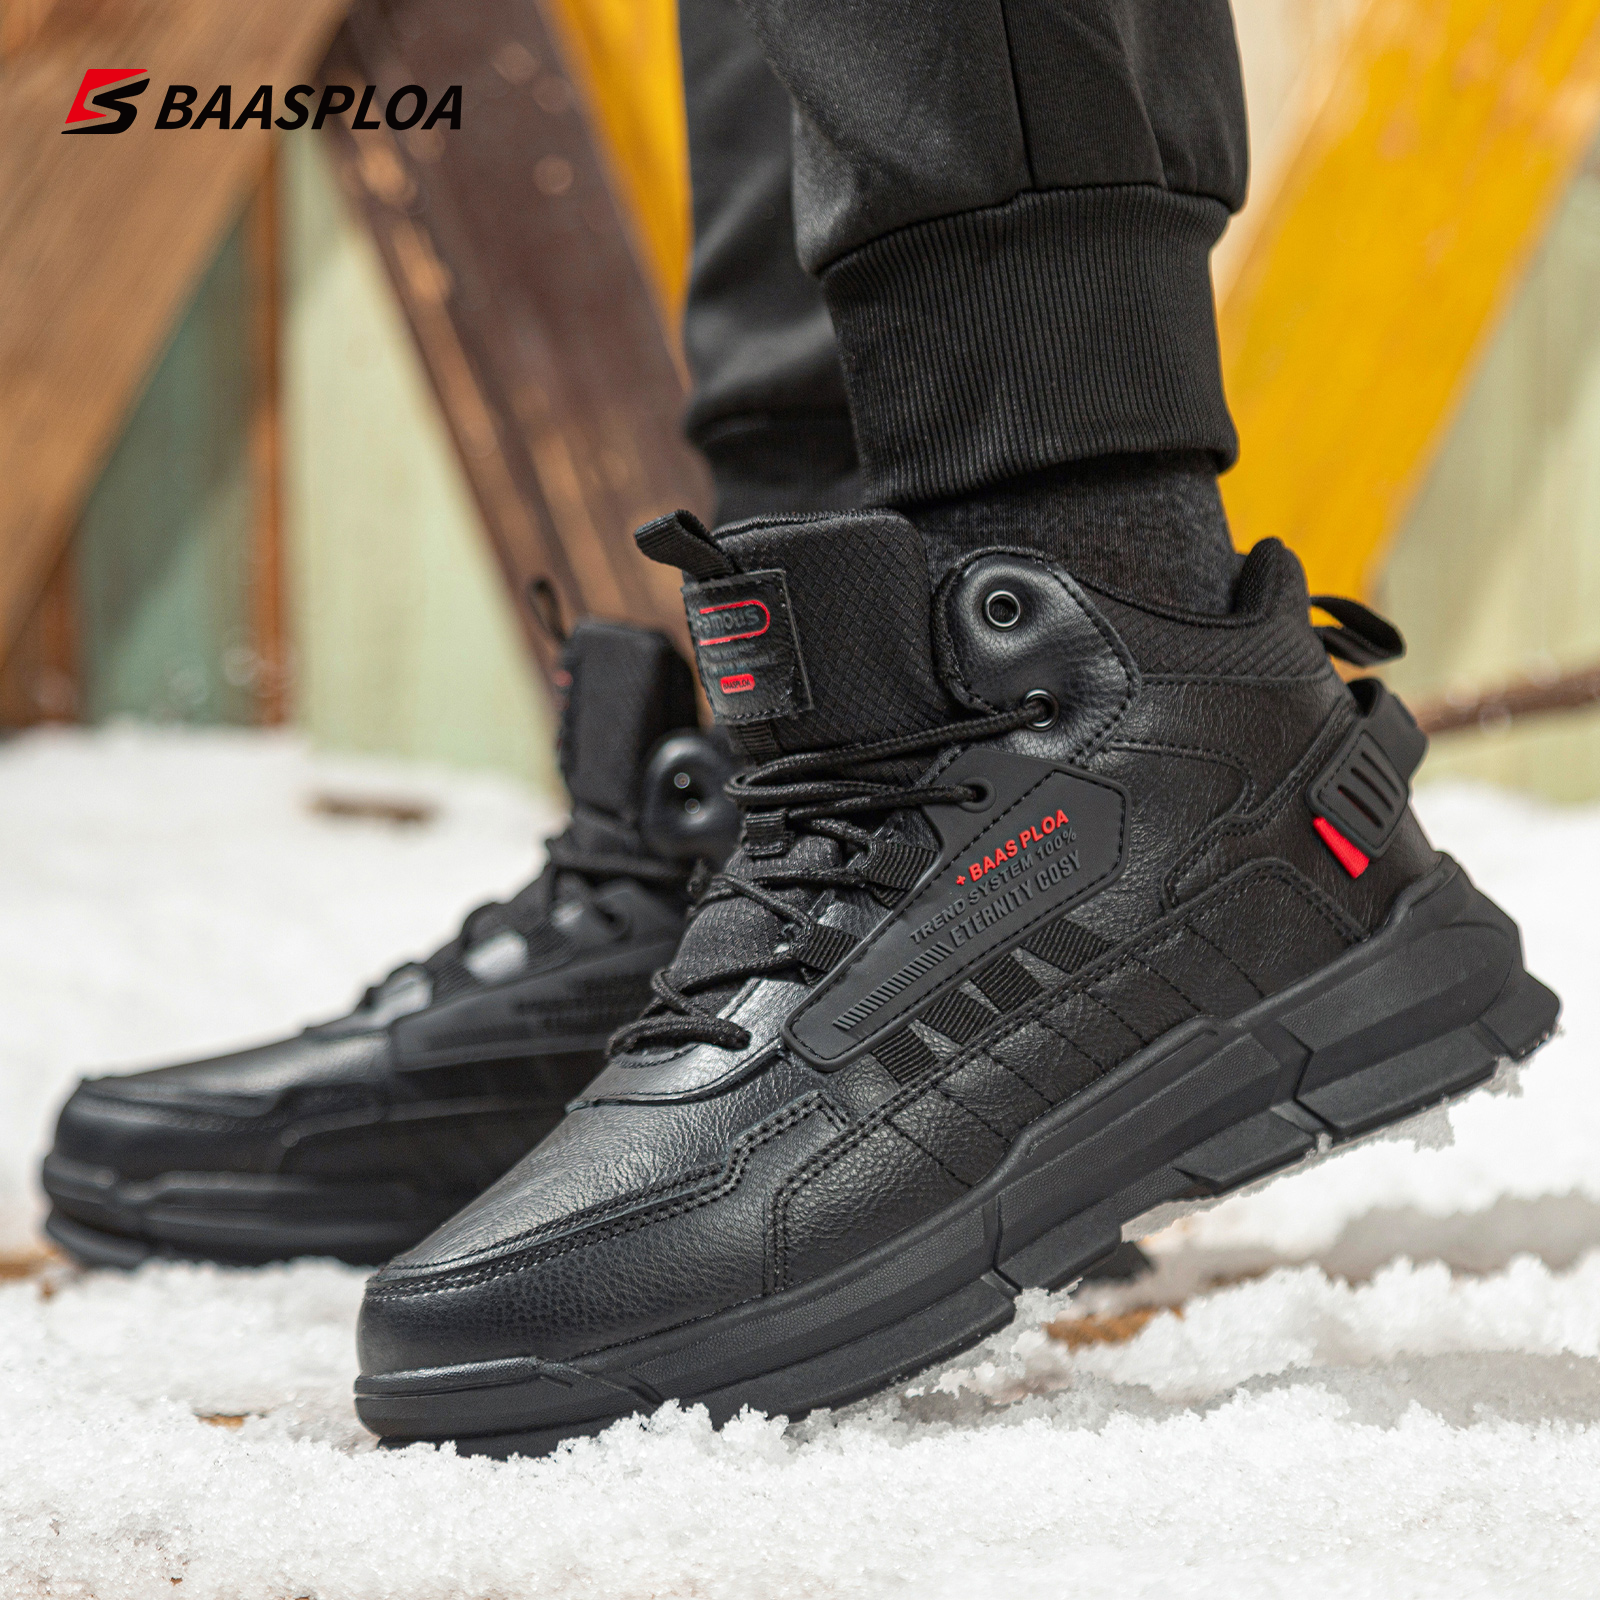 Baasploa Winter Men Leather Comfortable Cotton Shoes Waterproof Warm Outdoor Sneakers Non slip Wear resistant Walking